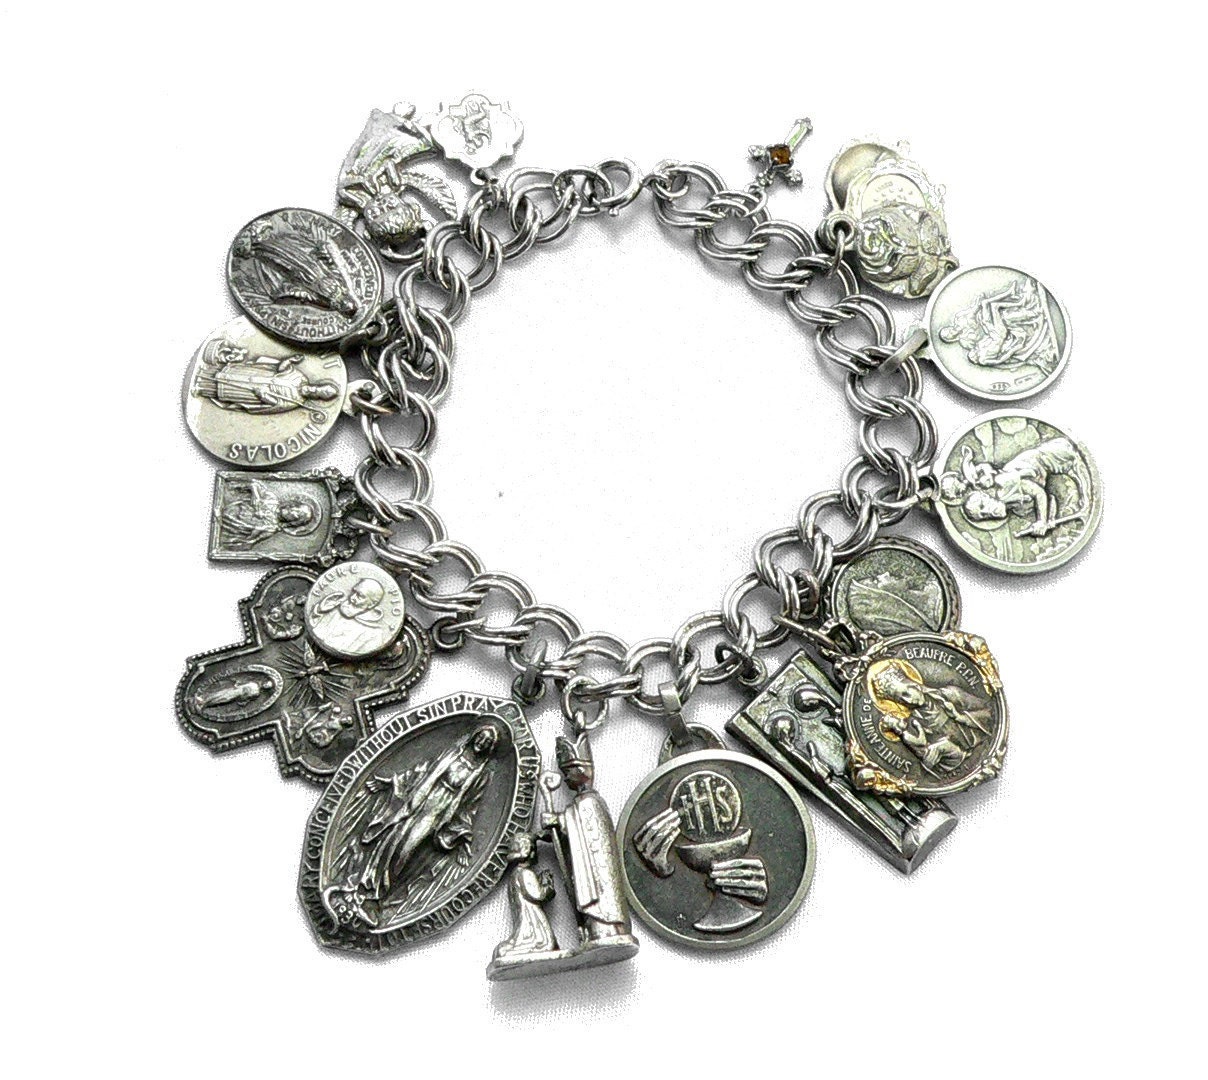 ... Medals Charm Bracelet Sterling Silver Antique Catholic Saints